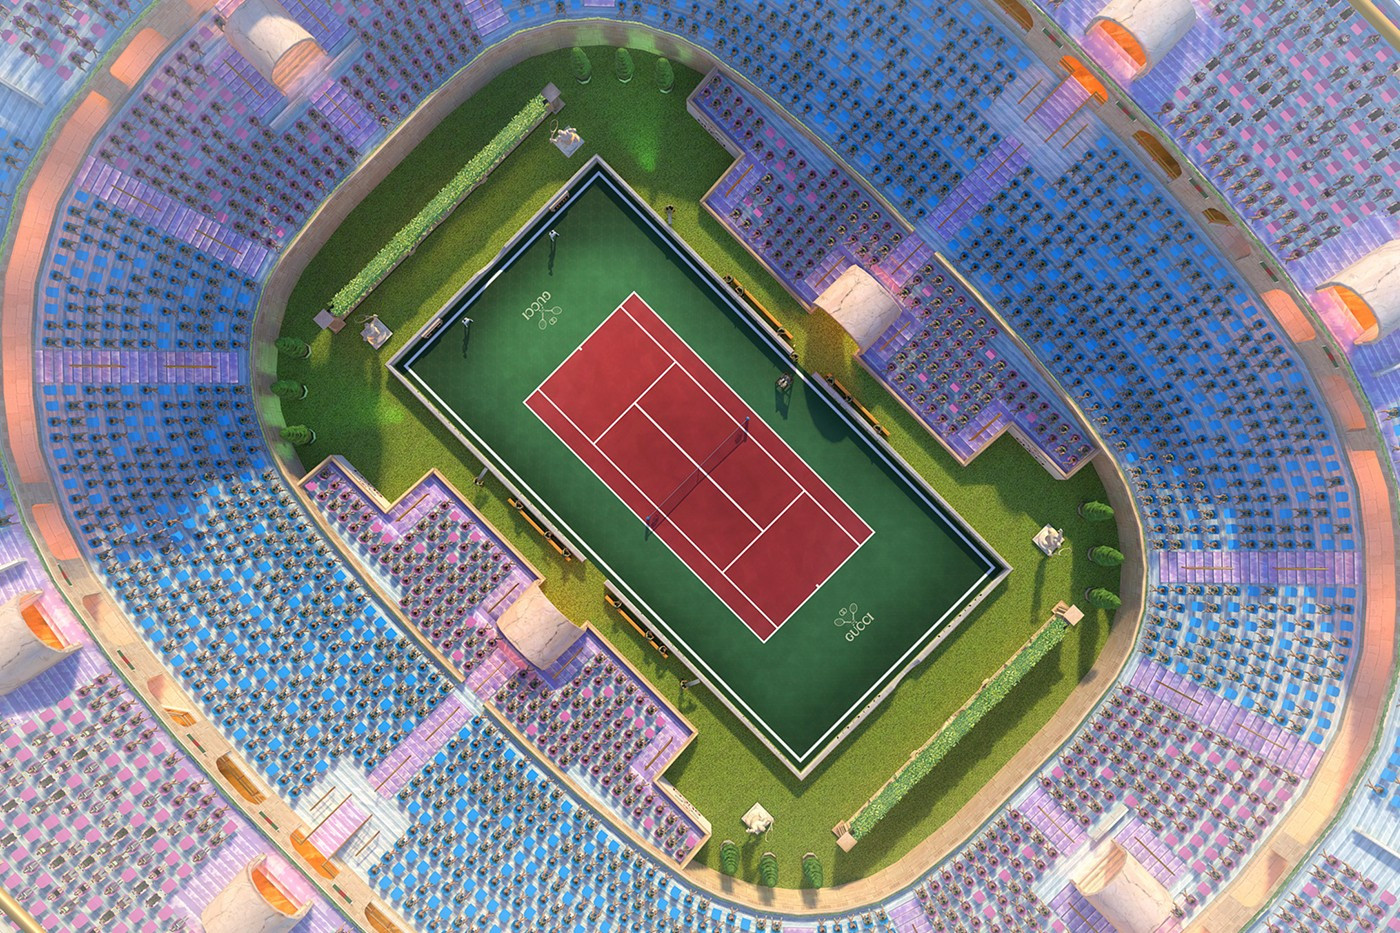 Gucci Tennis Clash